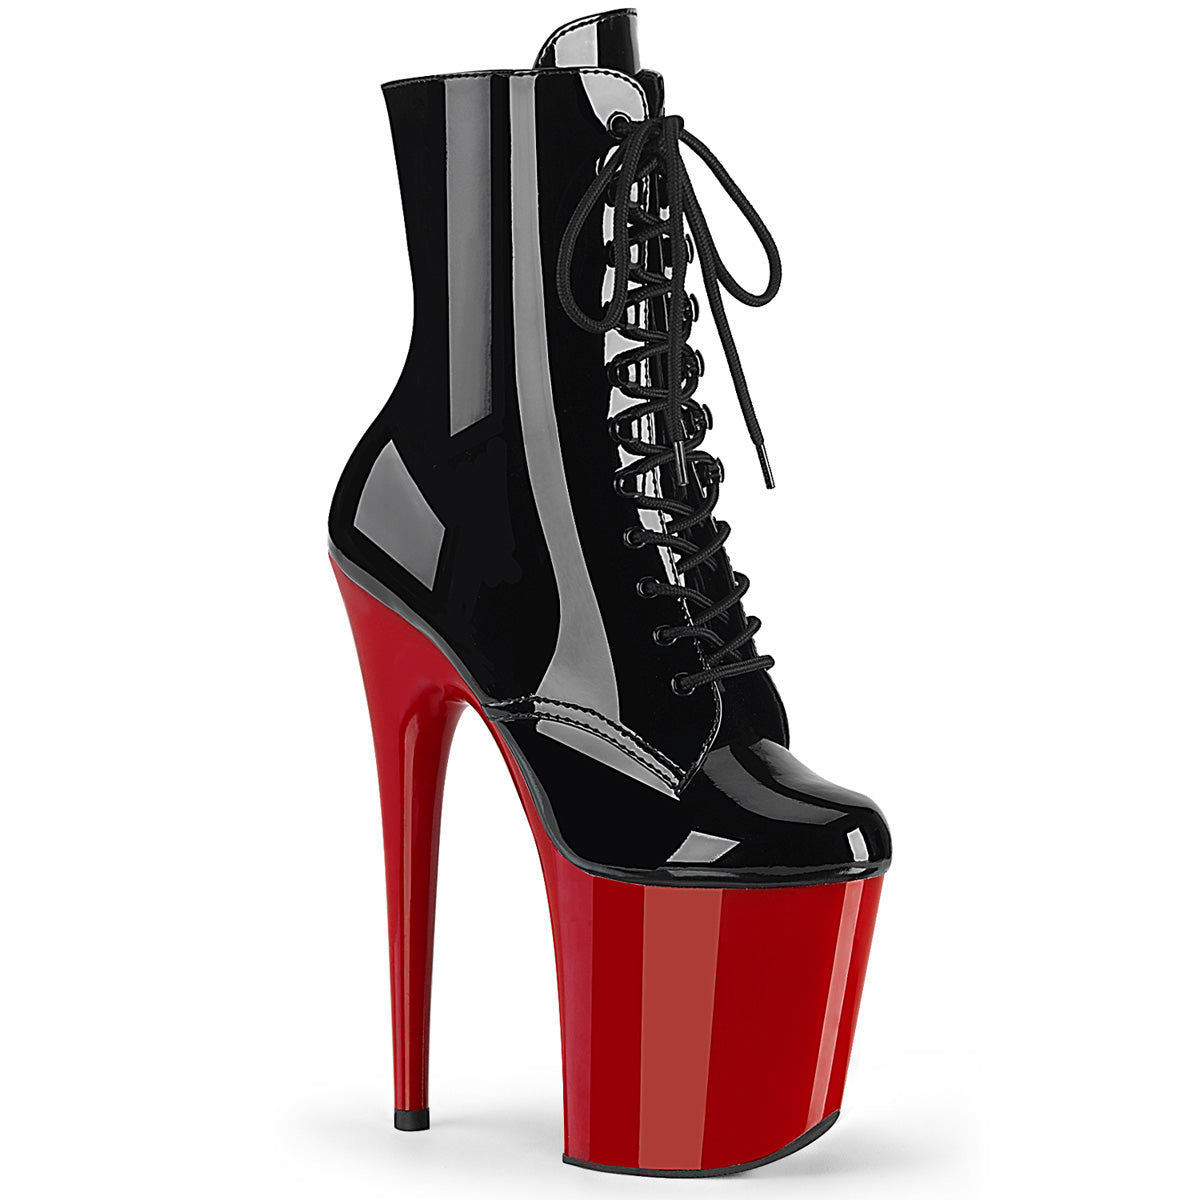 FLAMINGO-1020 8" Black Patent and Red Pole Dancer Platform Shoes